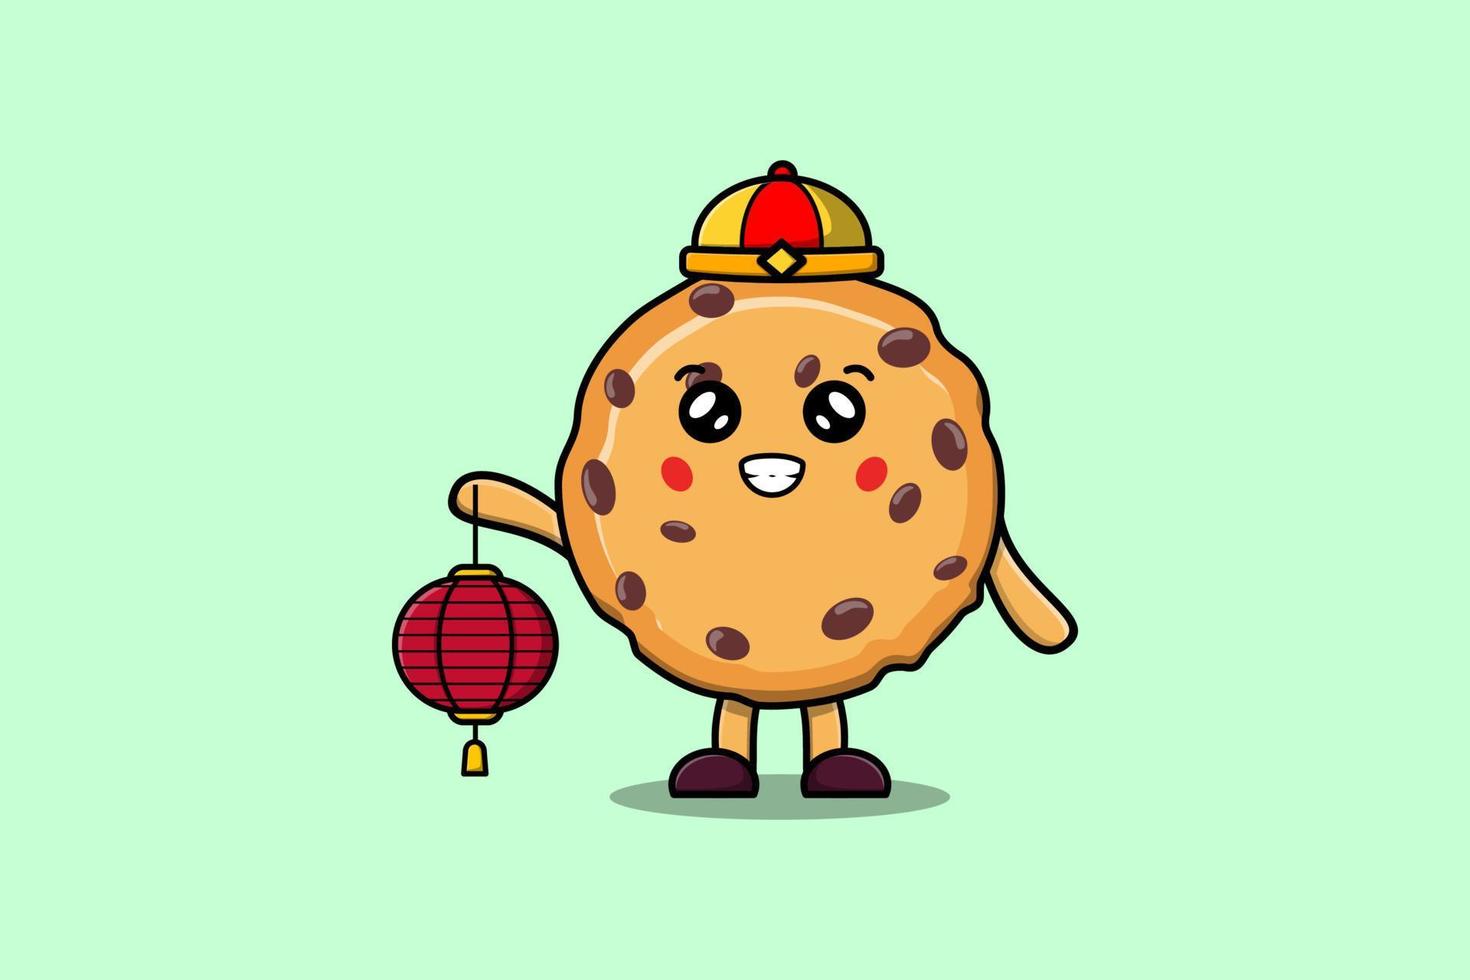 biscoitos bonitos dos desenhos animados chineses segurando a lanterna vetor